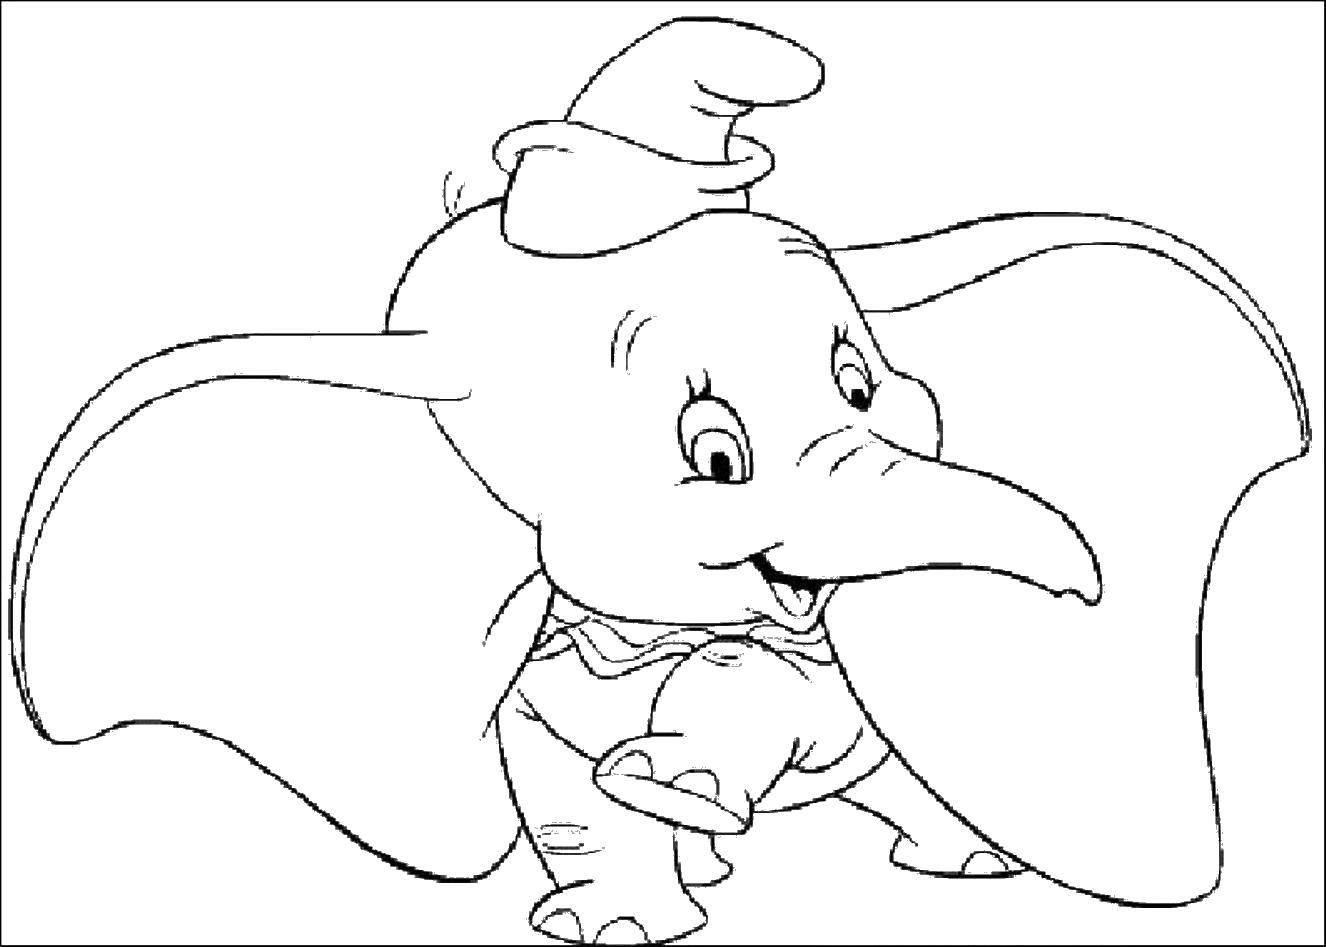 Coloring Baby elephant Dumbo. Category Disney cartoons. Tags:  Dumbo the elephant, hat, ears.